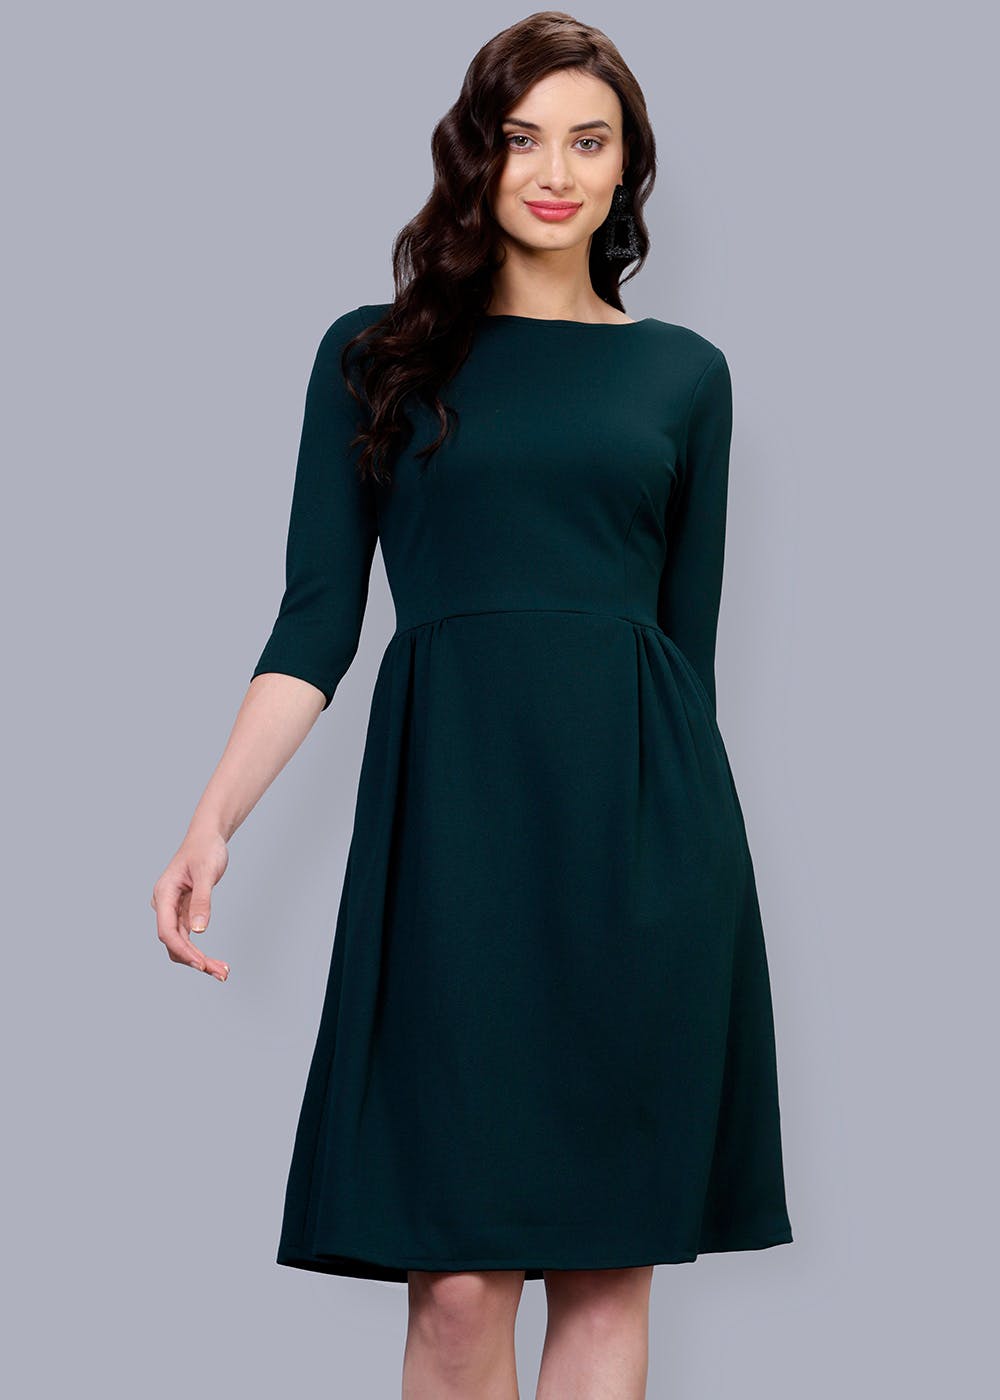 Get Dark Green Pleated Yoke Dress at ₹ 849 | LBB Shop